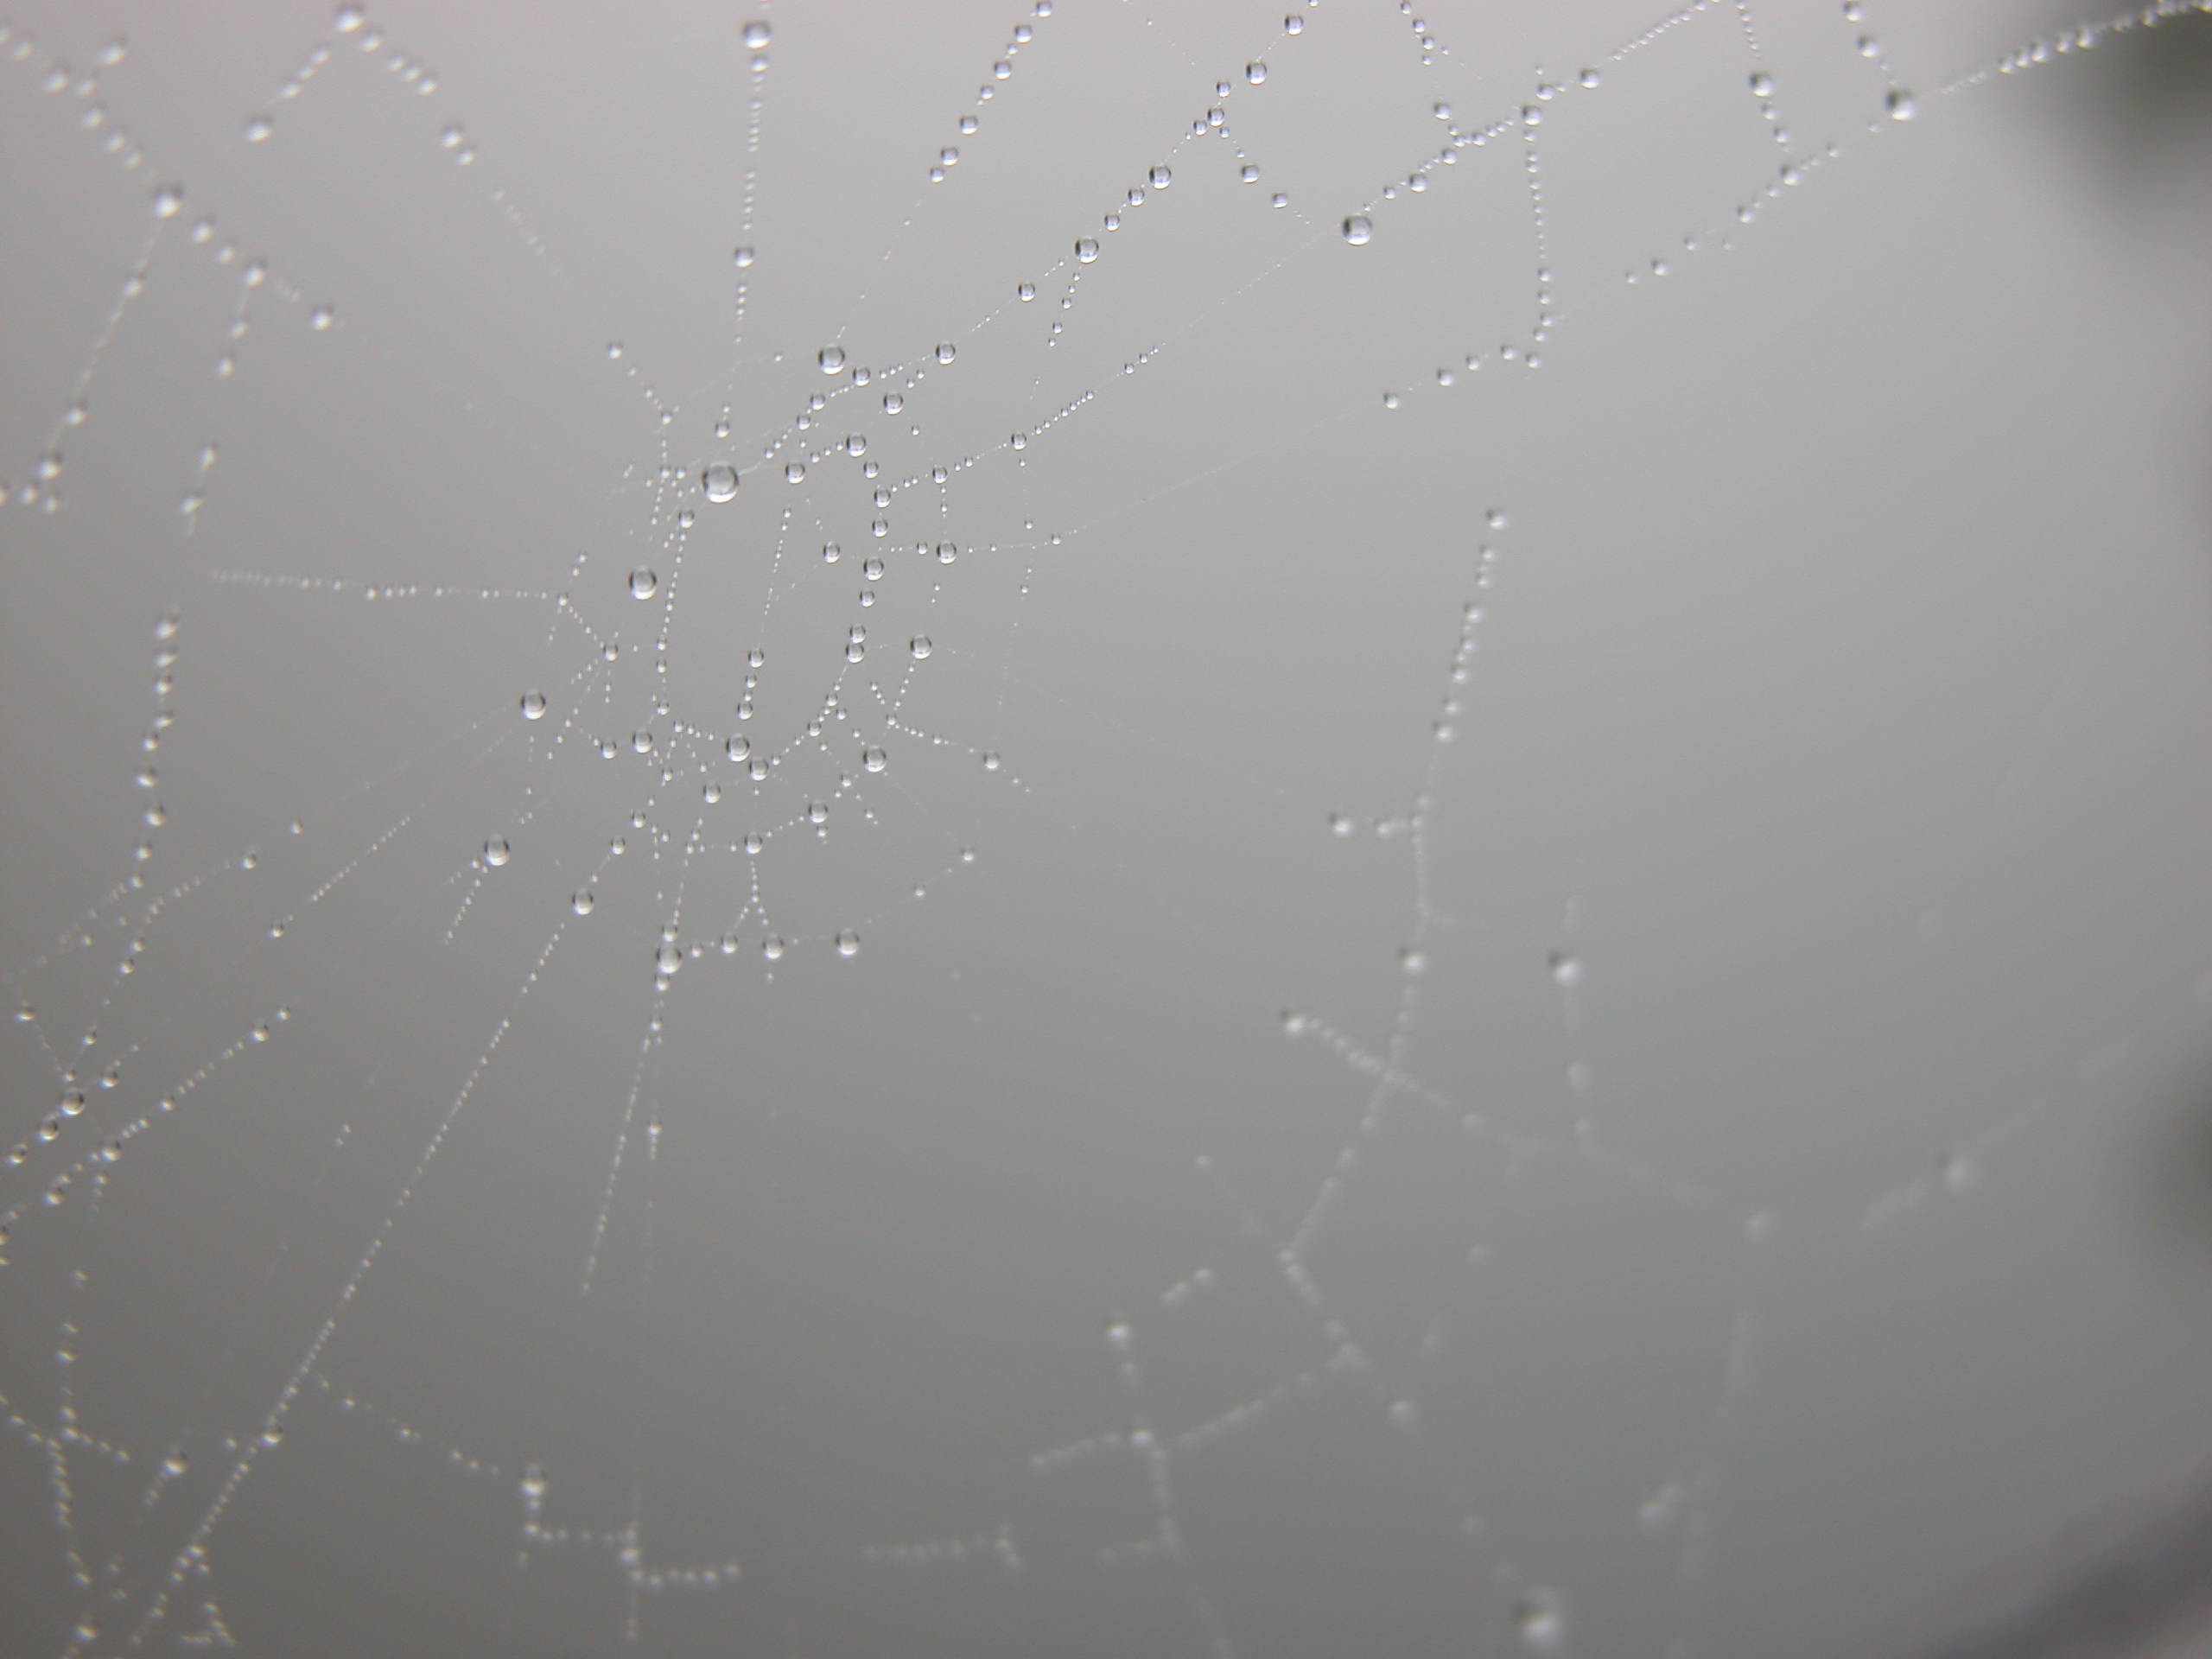 spiderweb web waterdrop waterdrops droplet droplets universe dewdrop dewdrops water cobweb